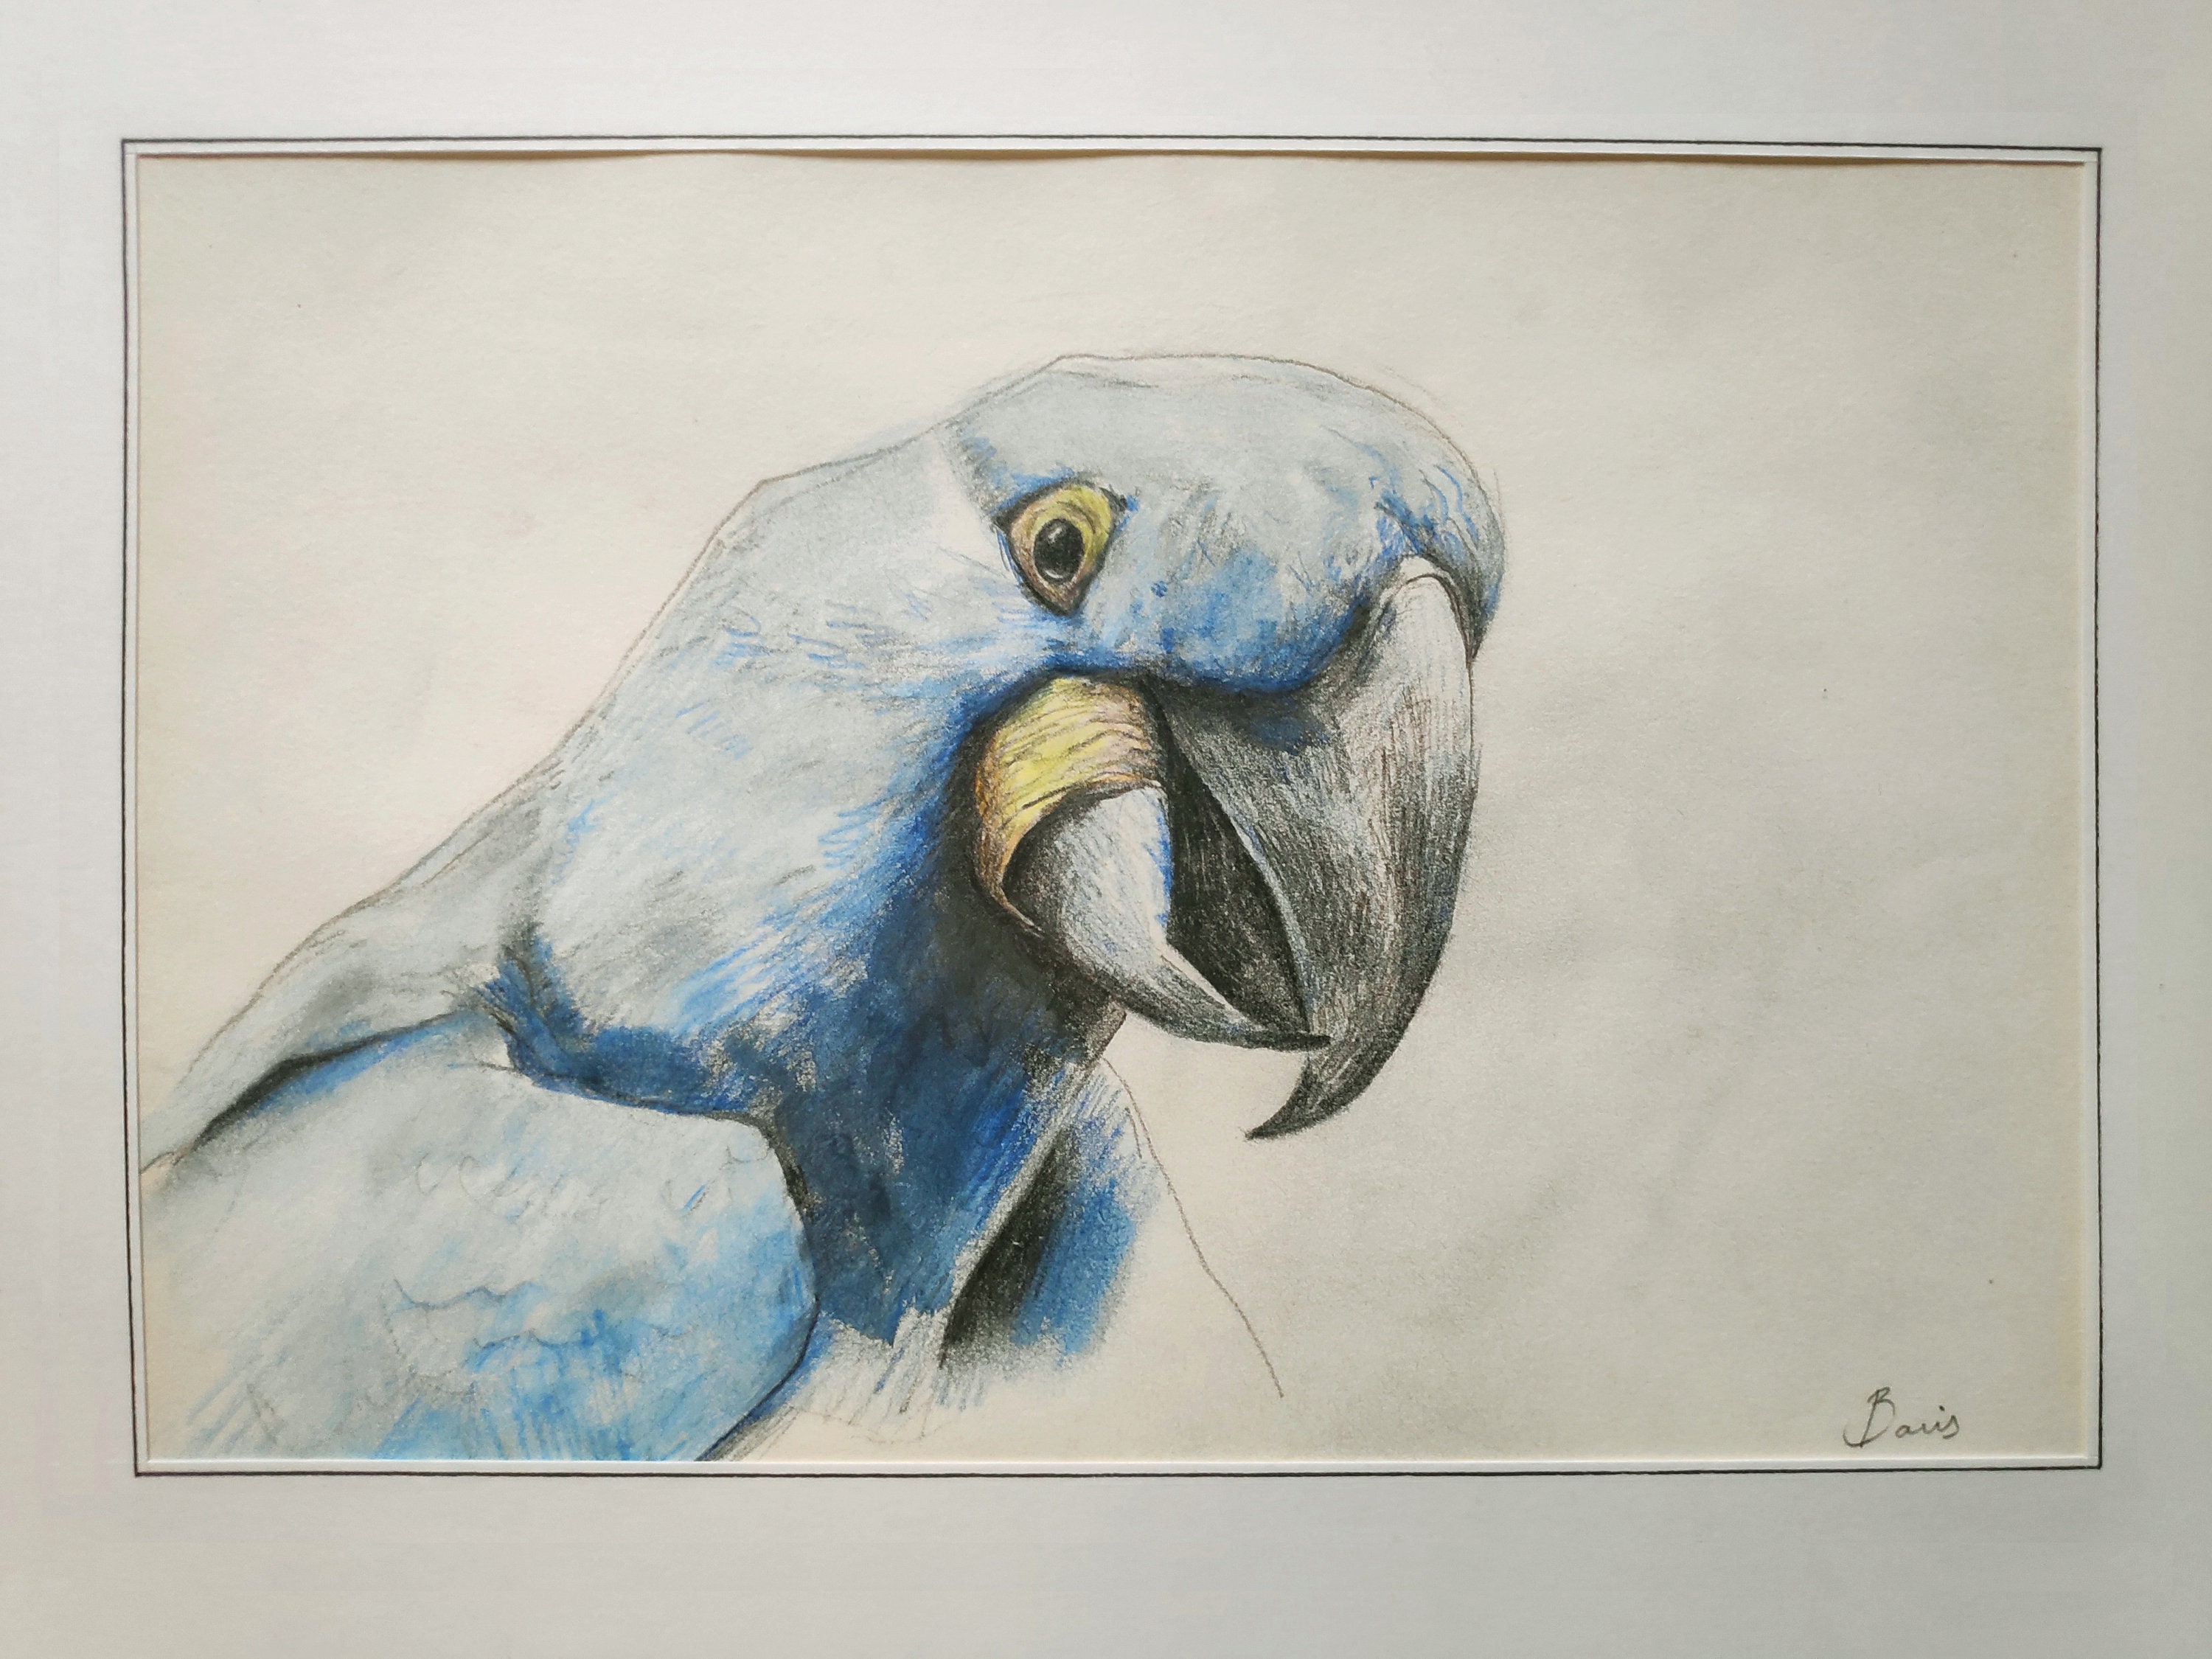 Macaw, me, Pastel pencils, 2020 : r/Art